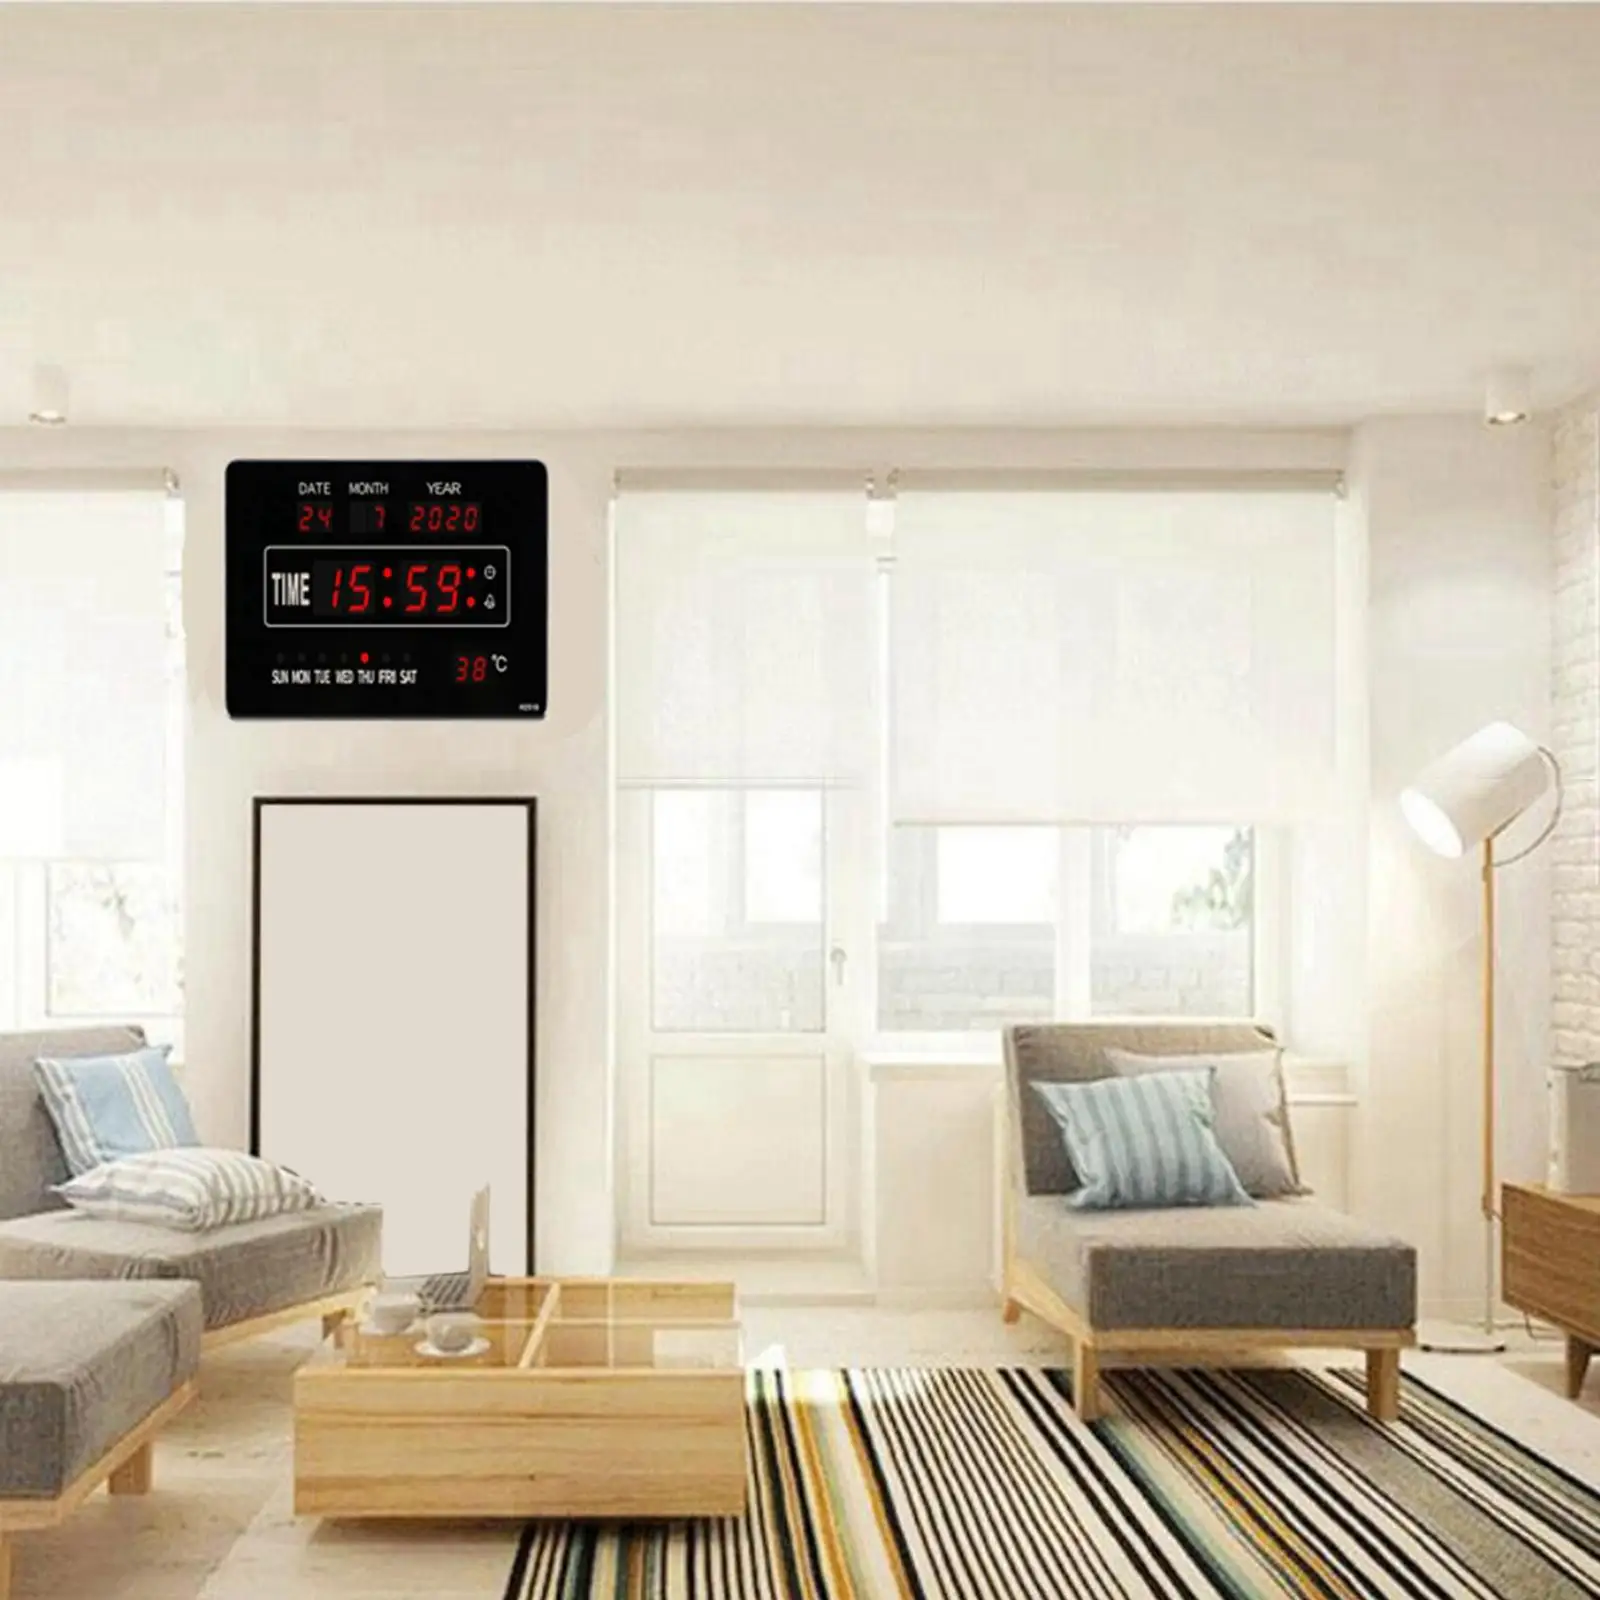 Digital Alarm Clock Desktop Bedside Wall Clock for Bedroom Living Room